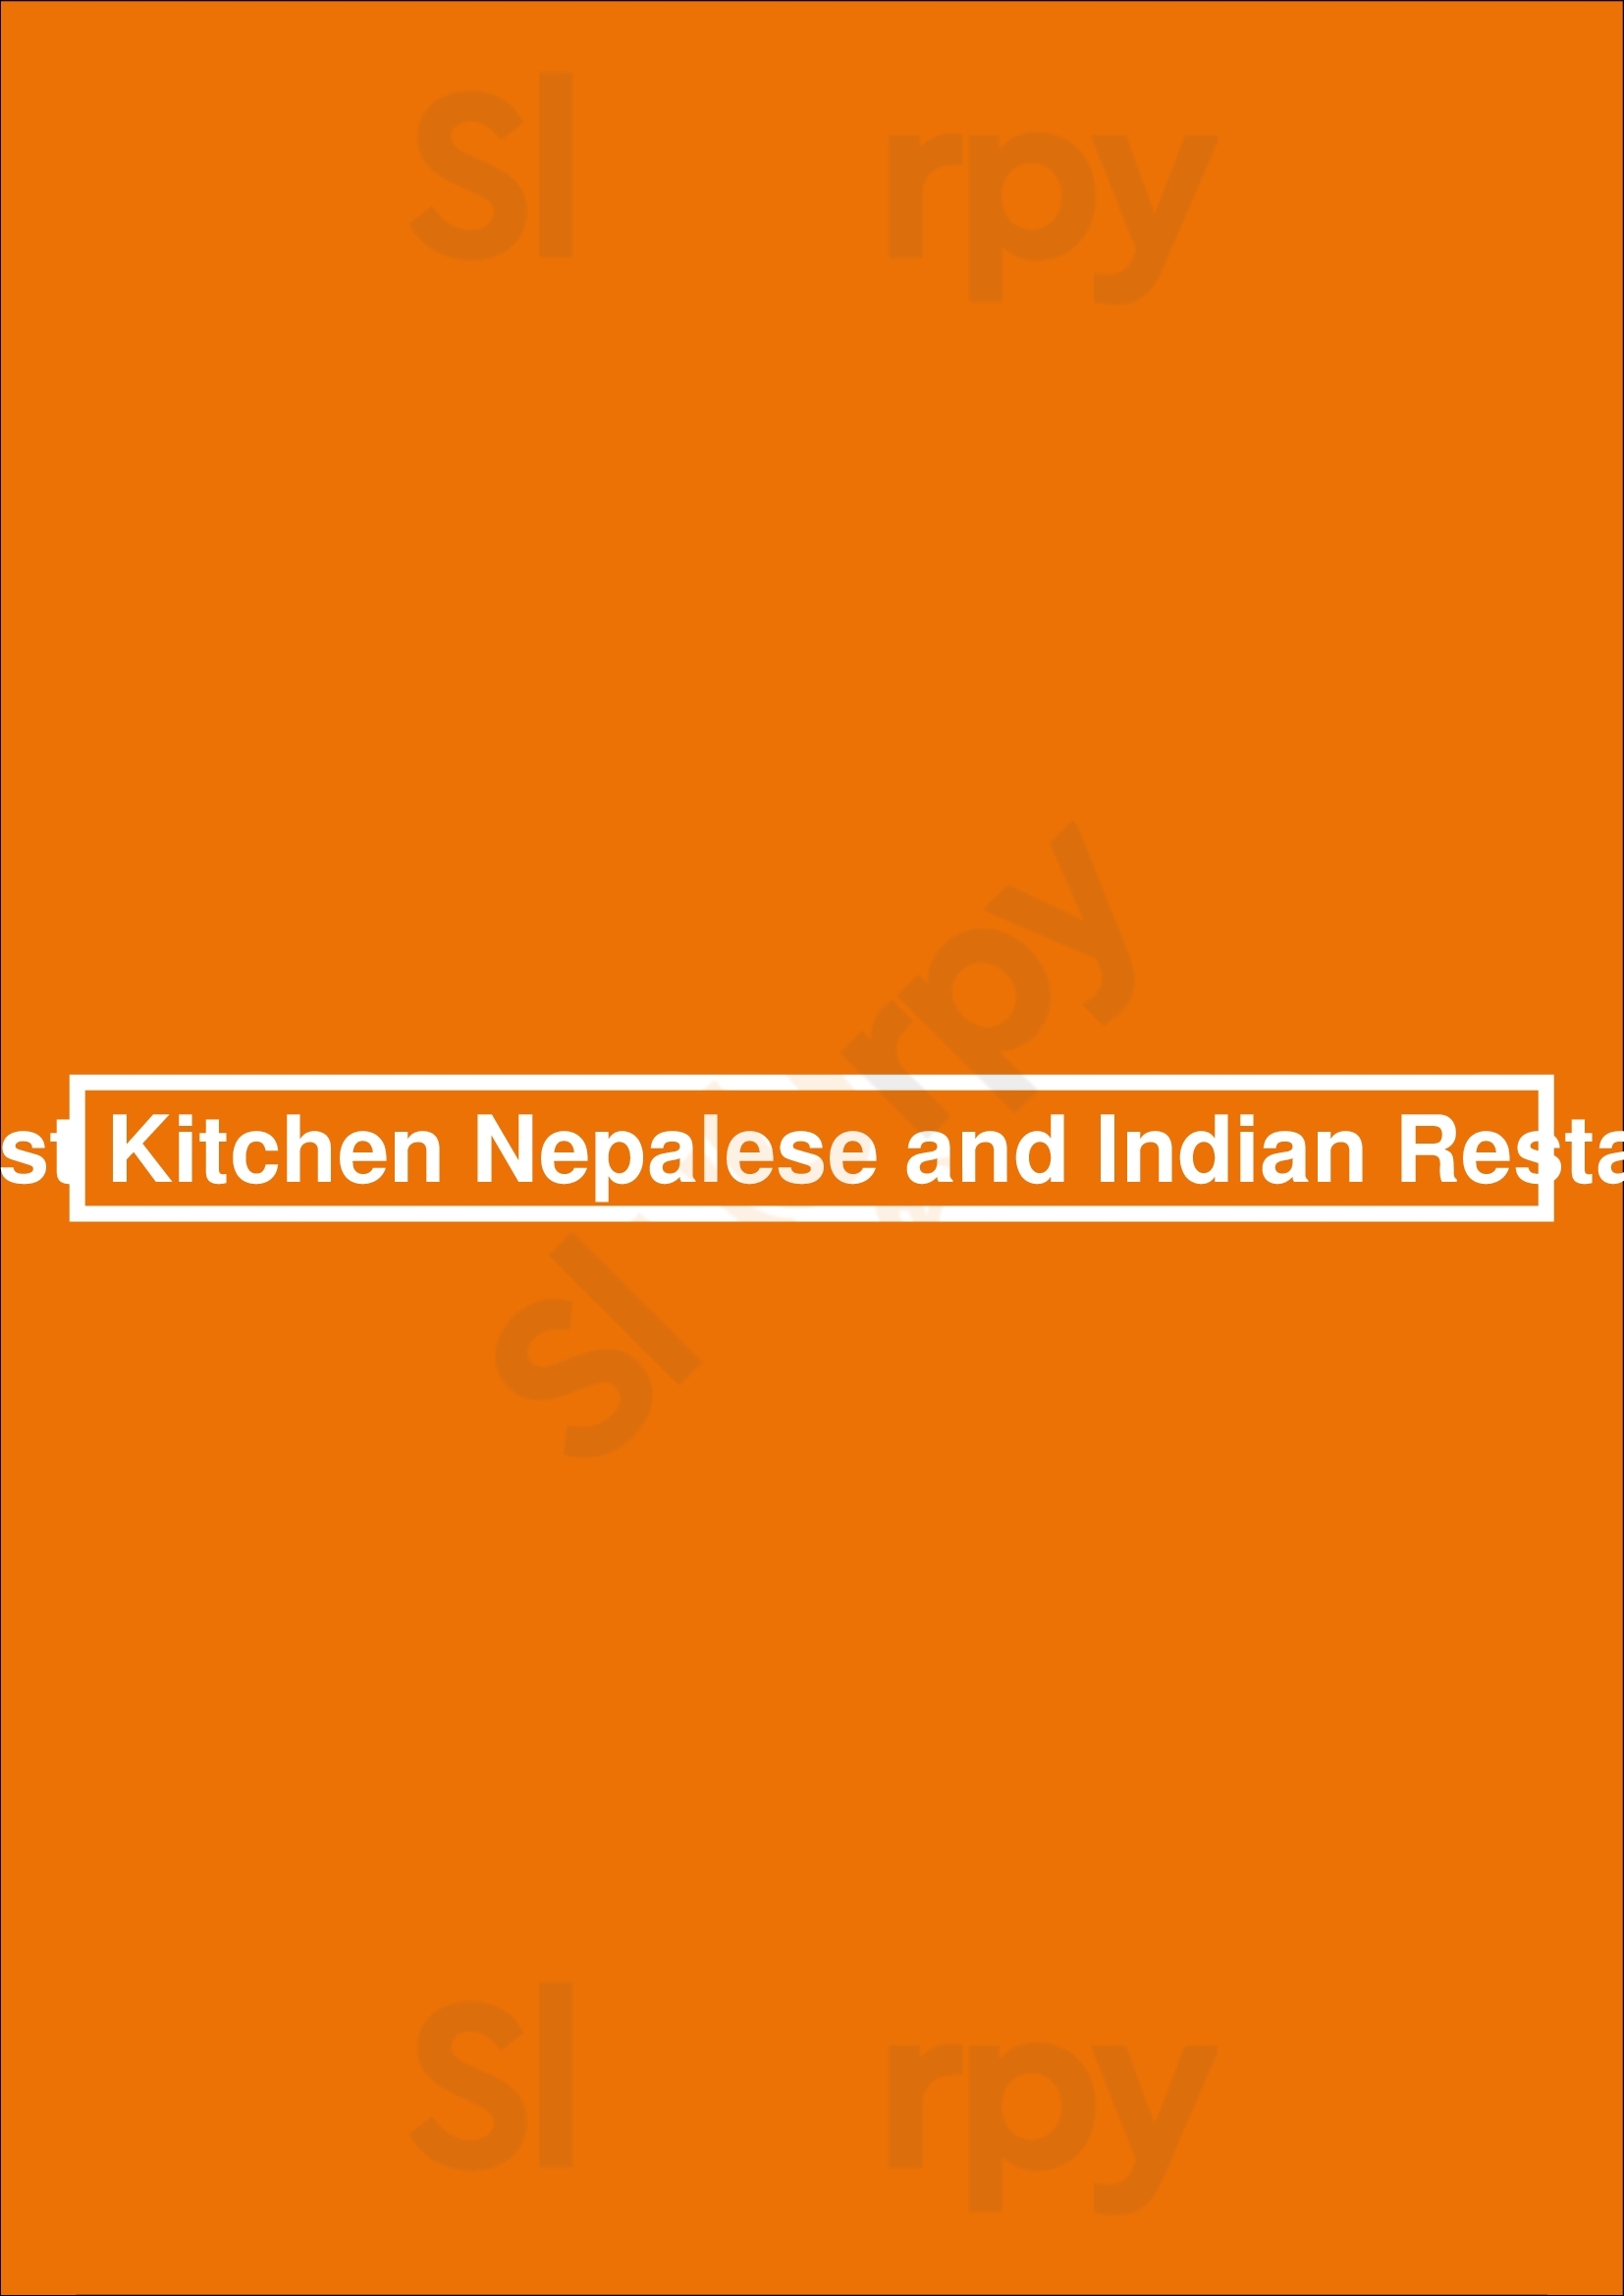 Everest Kitchen Nepalese And Indian Restaurant Swords Menu - 1